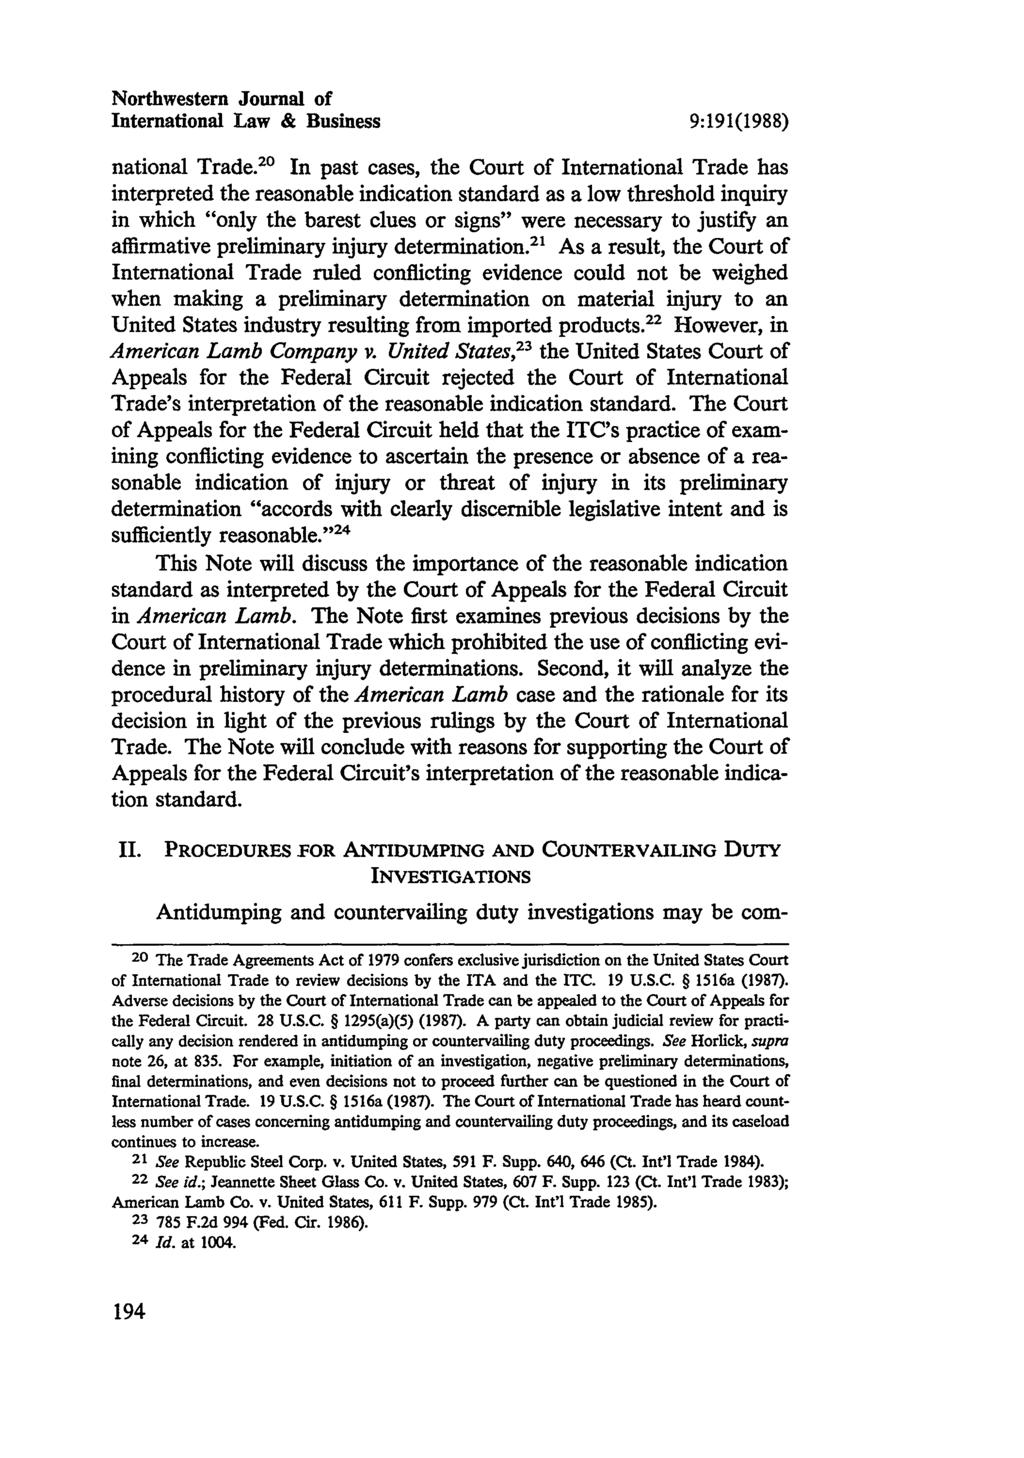 Northwestern Journal of International Law & Business 9:191(1988) national Trade.